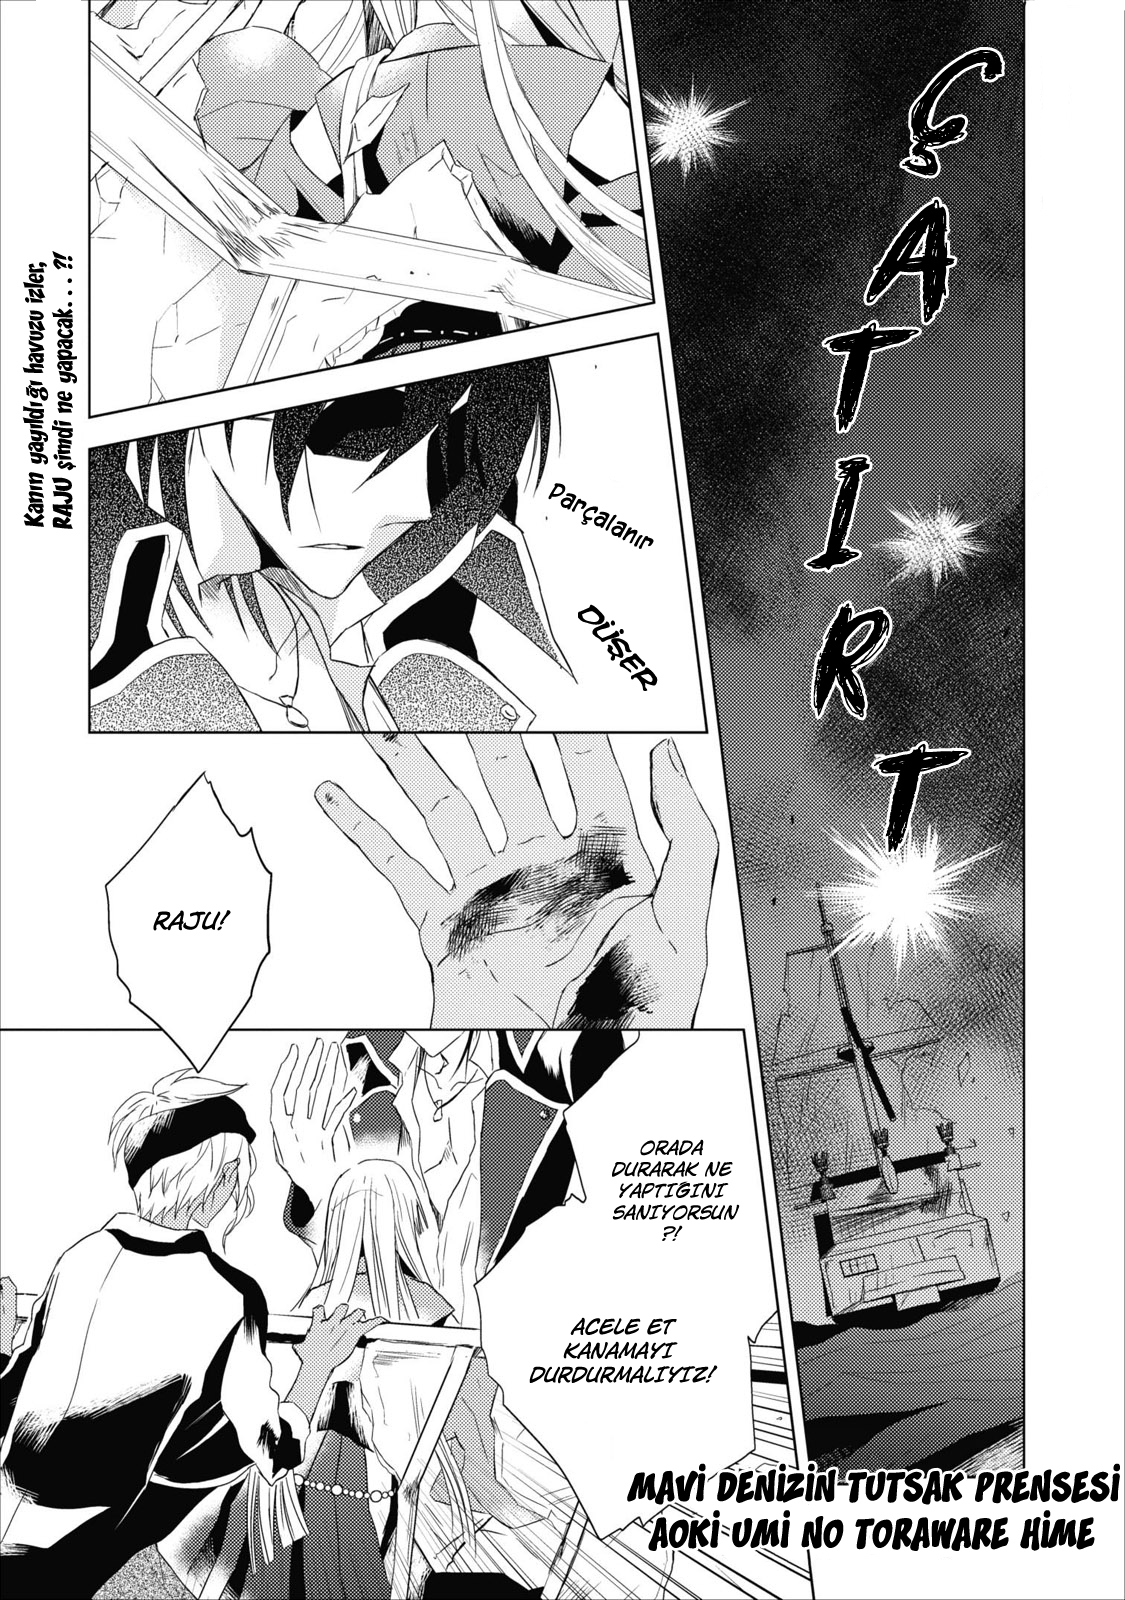 Aoki Umi no Torawarehime: Chapter 04 - Page 4